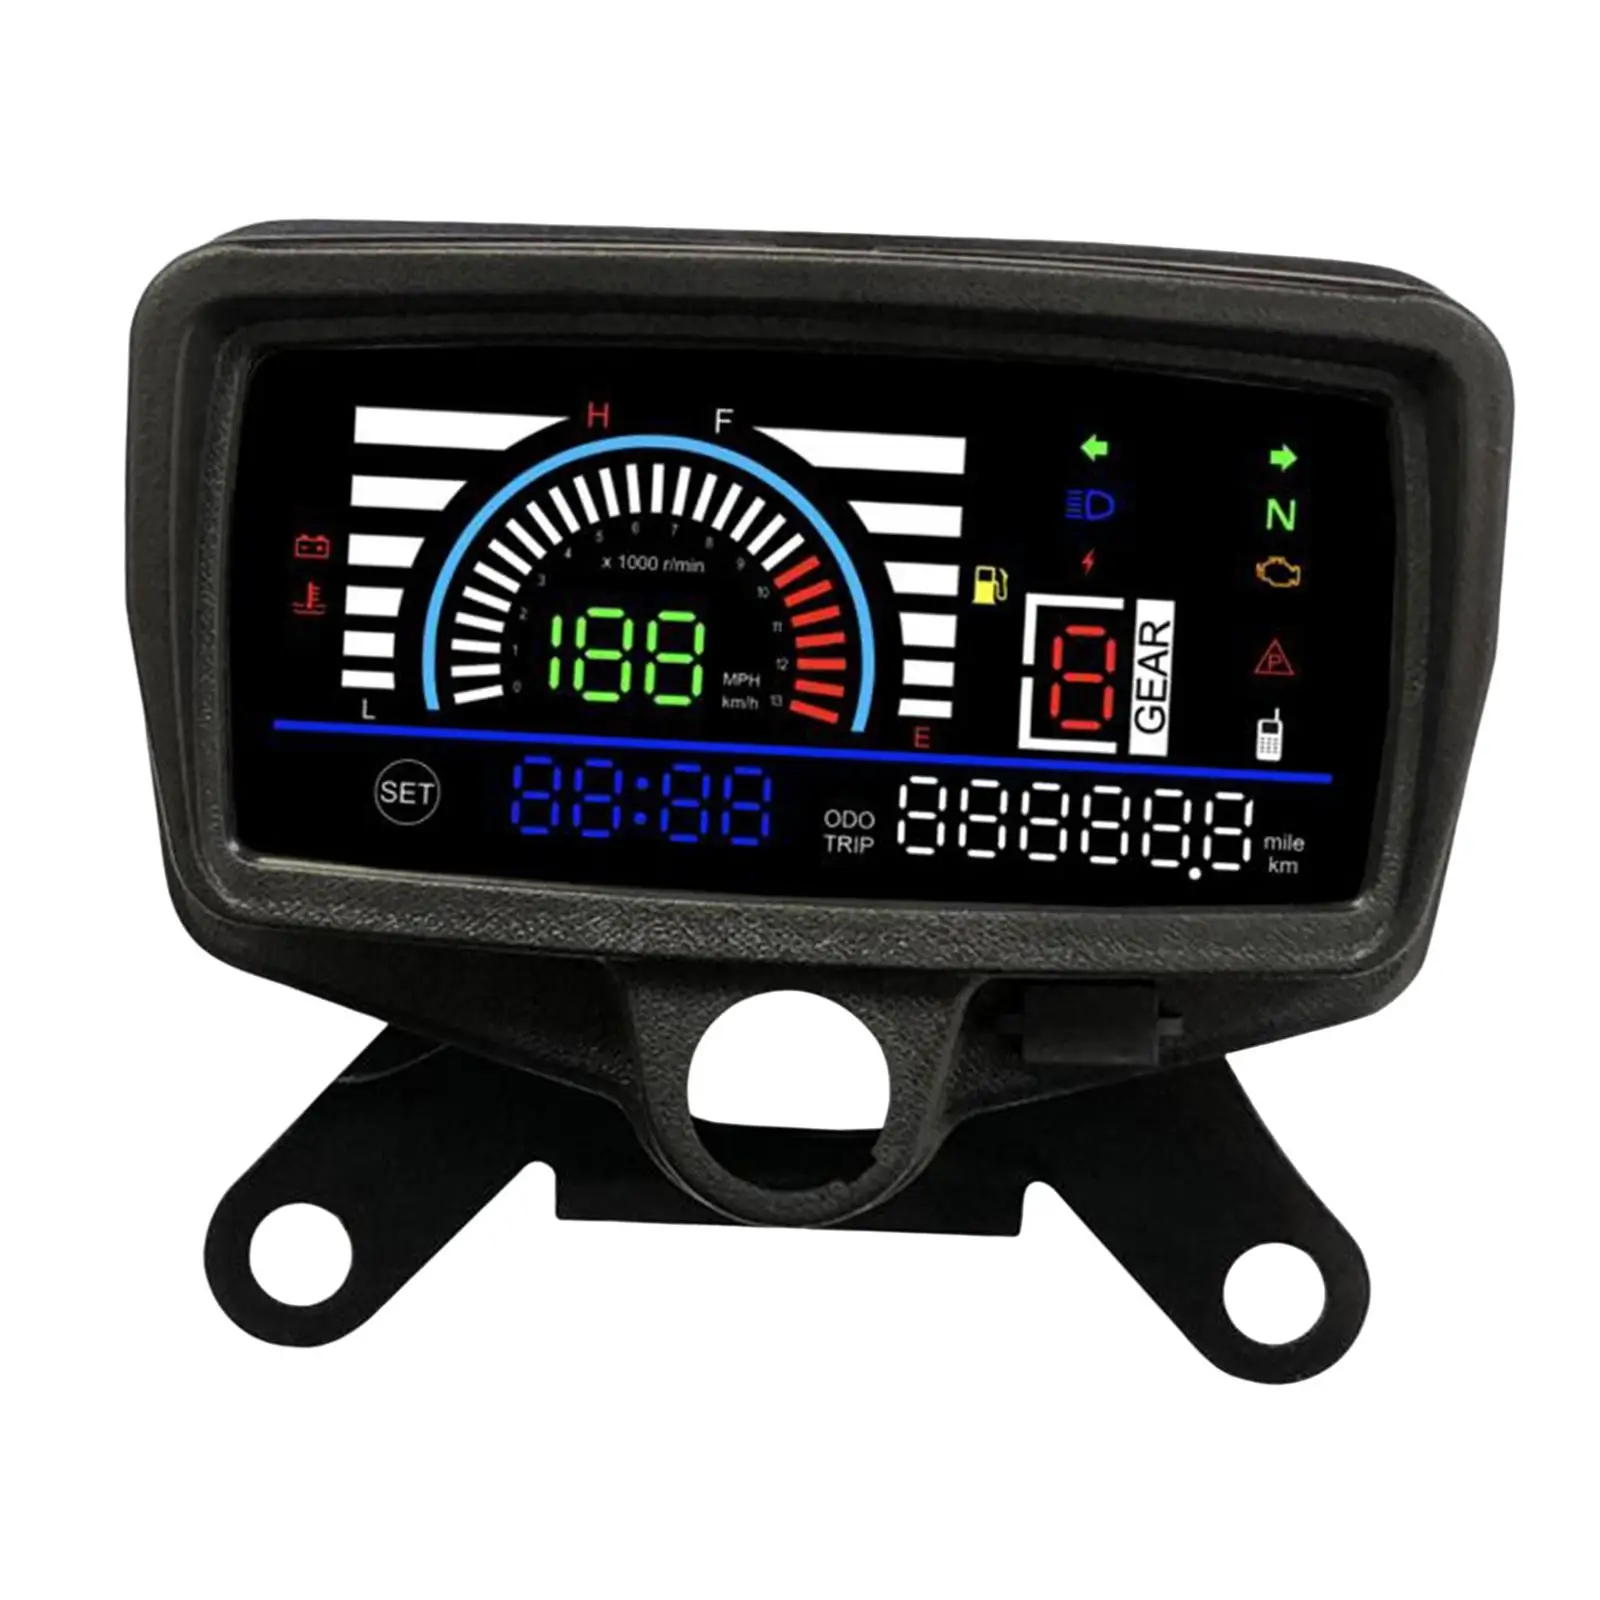 Motorbike LCD Digital Speedometer 12V Odometer Gauge Digital Gauge Instrument for CG125-Cg150 Modification Replace Parts